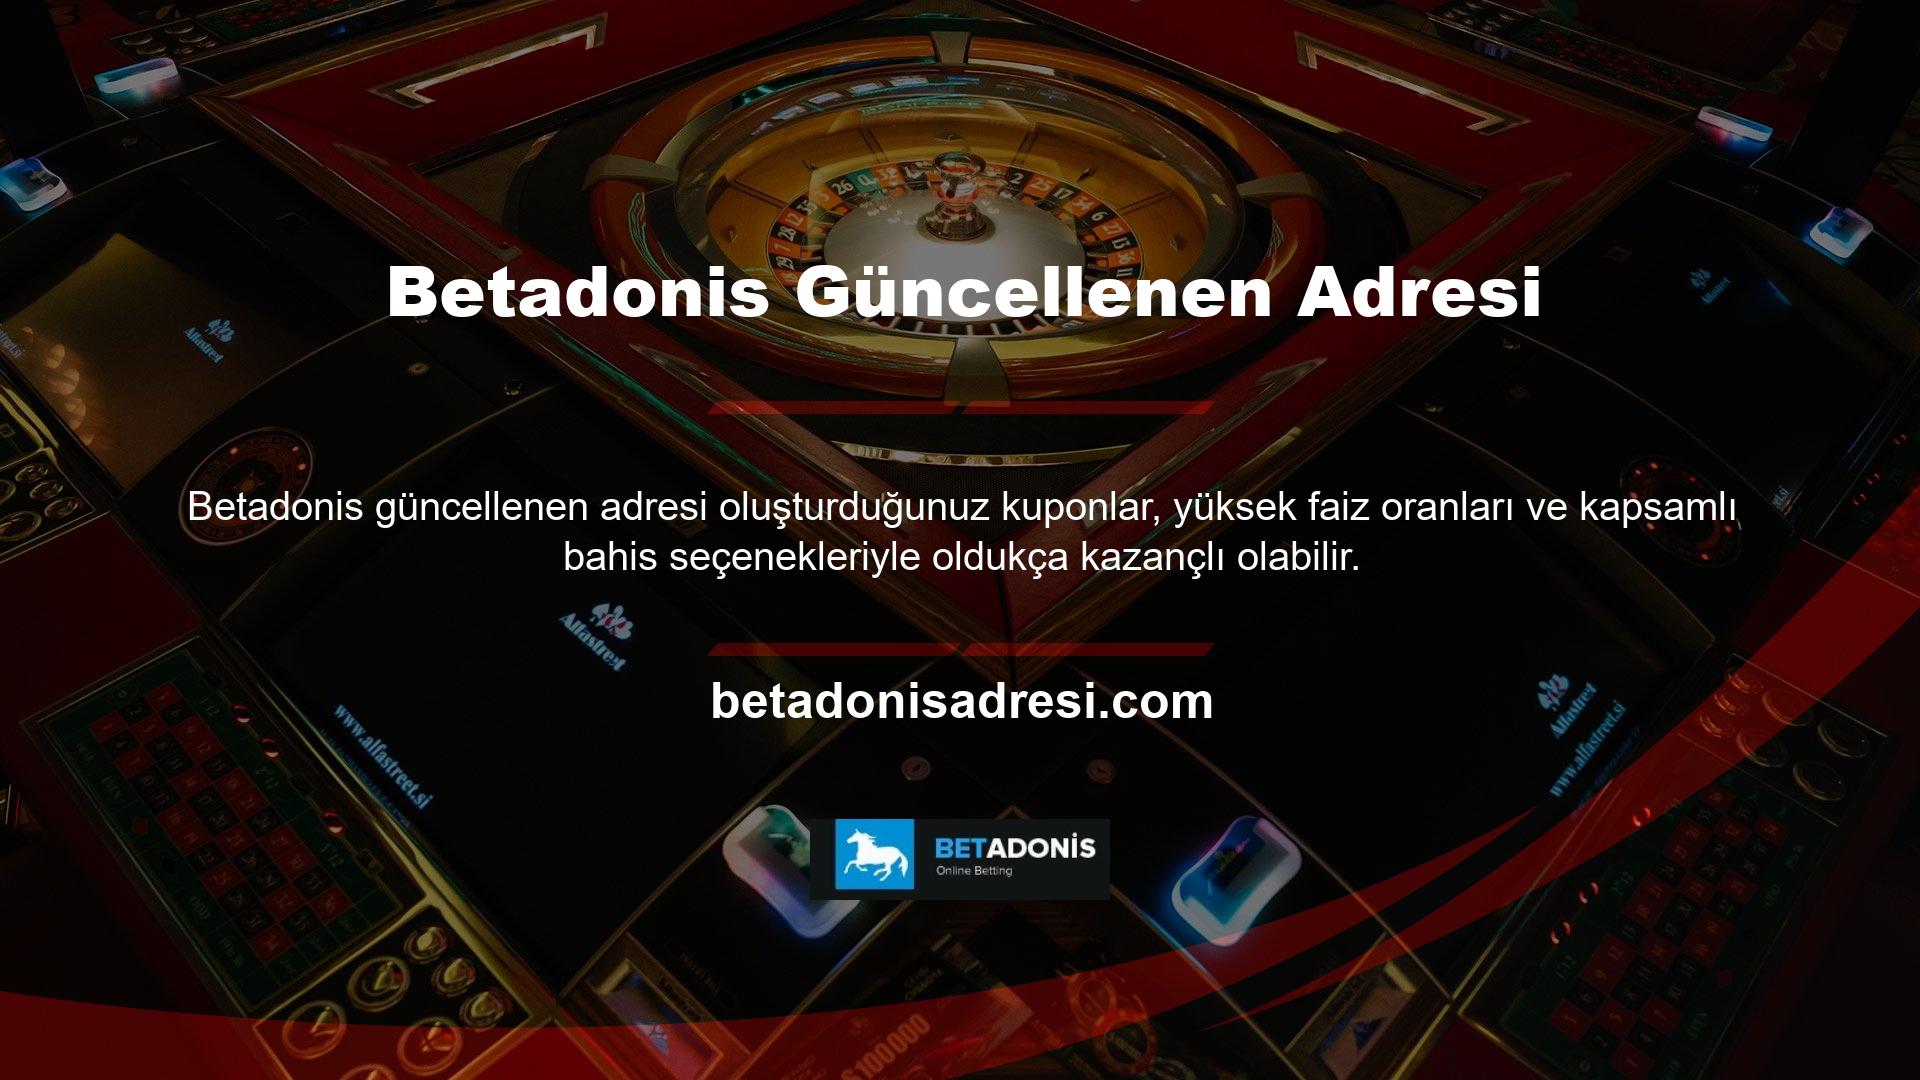 Betadonis artık yetkili adrestir